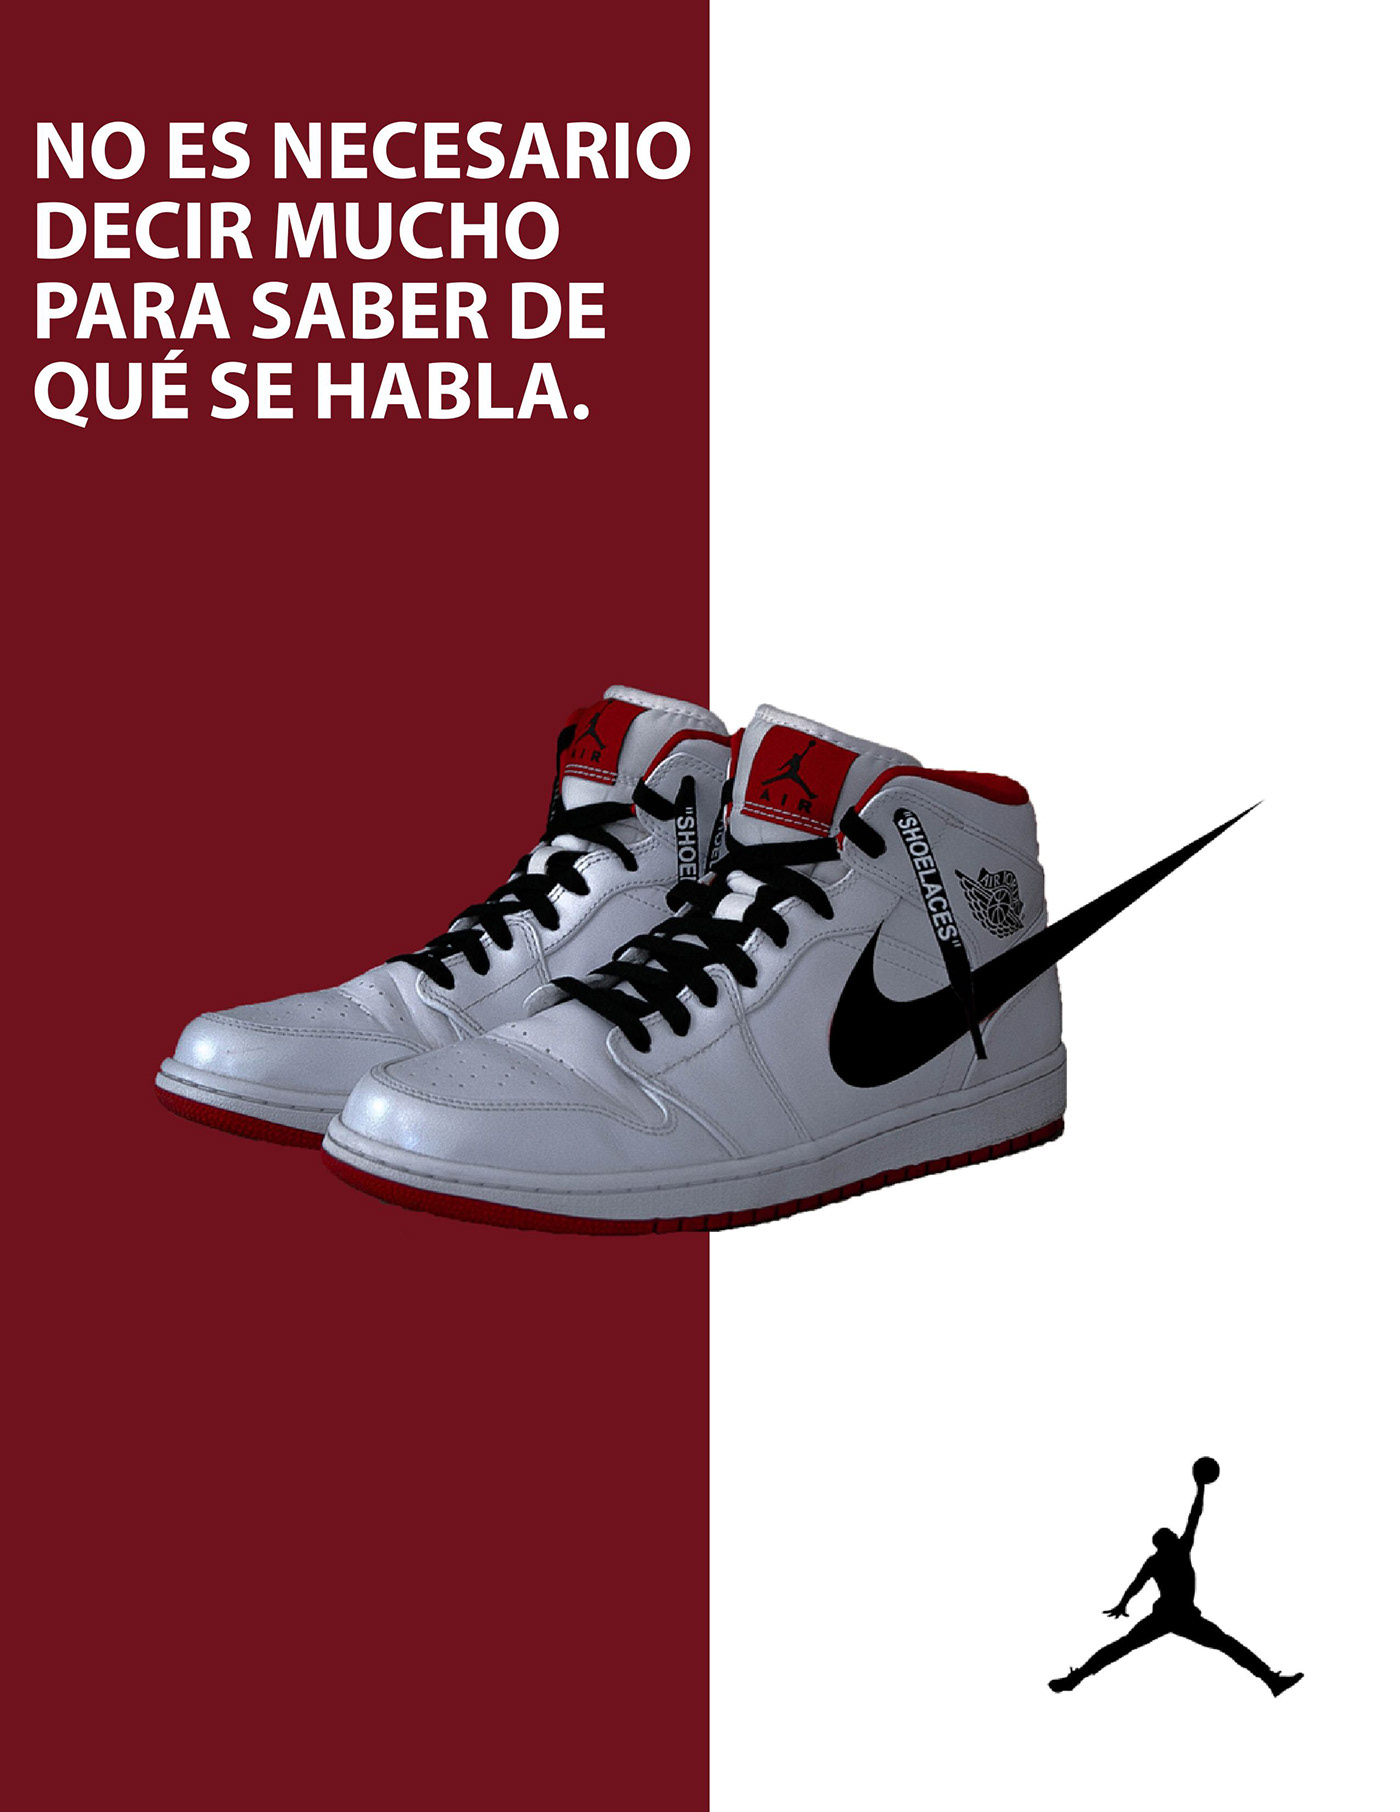 Adsnike deporte Nike nike jordan nikerunning publicidadnike zapatos